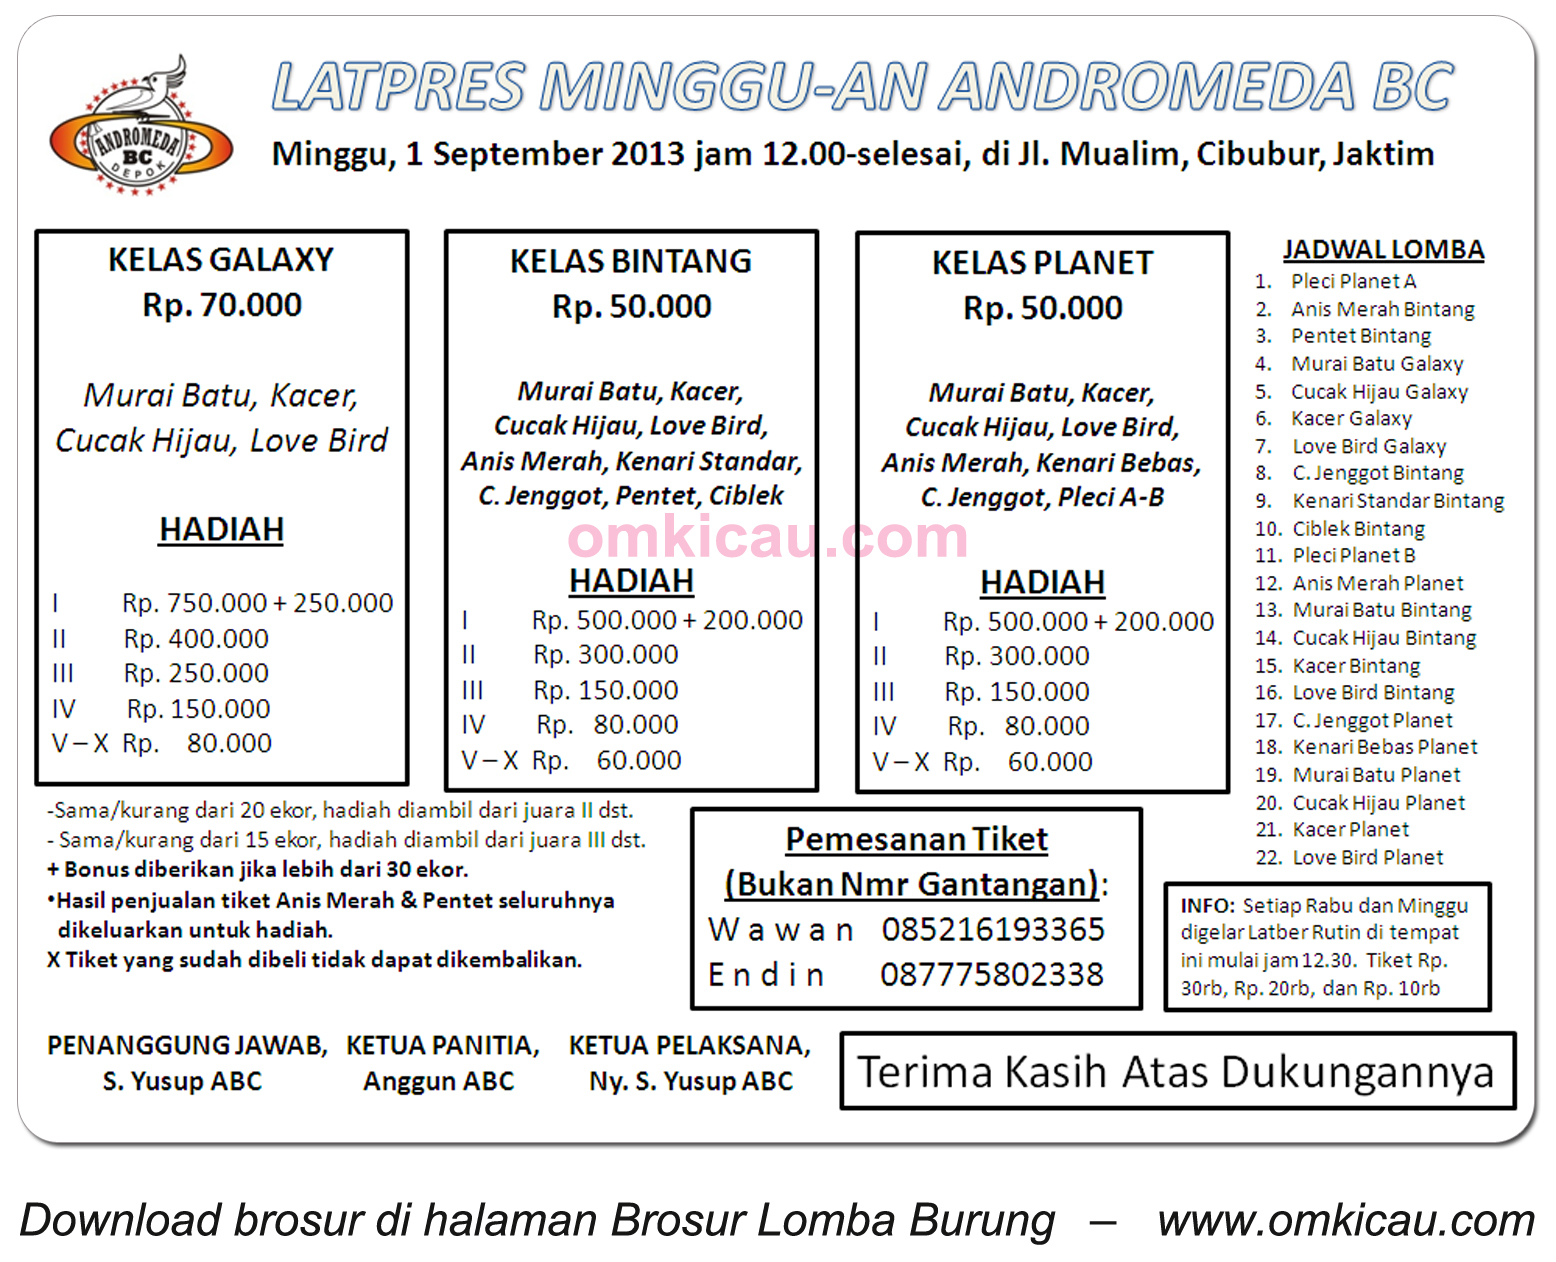 Brosur Latpres Andromeda BC Jakarta 1 Sept 2013